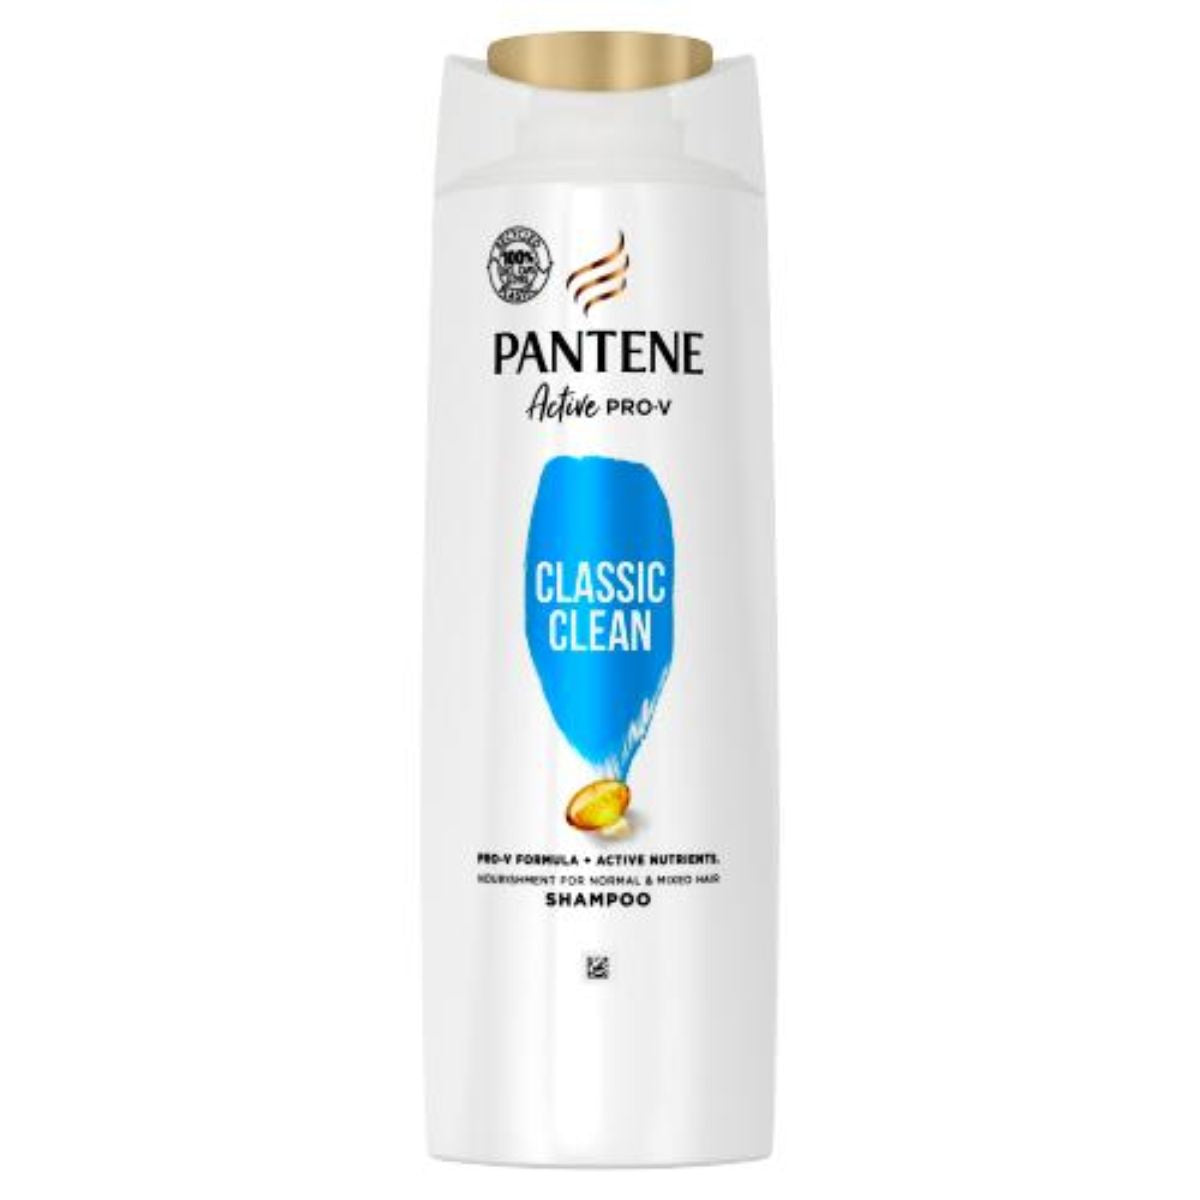 Pantene classic clean shampoo 400ml.